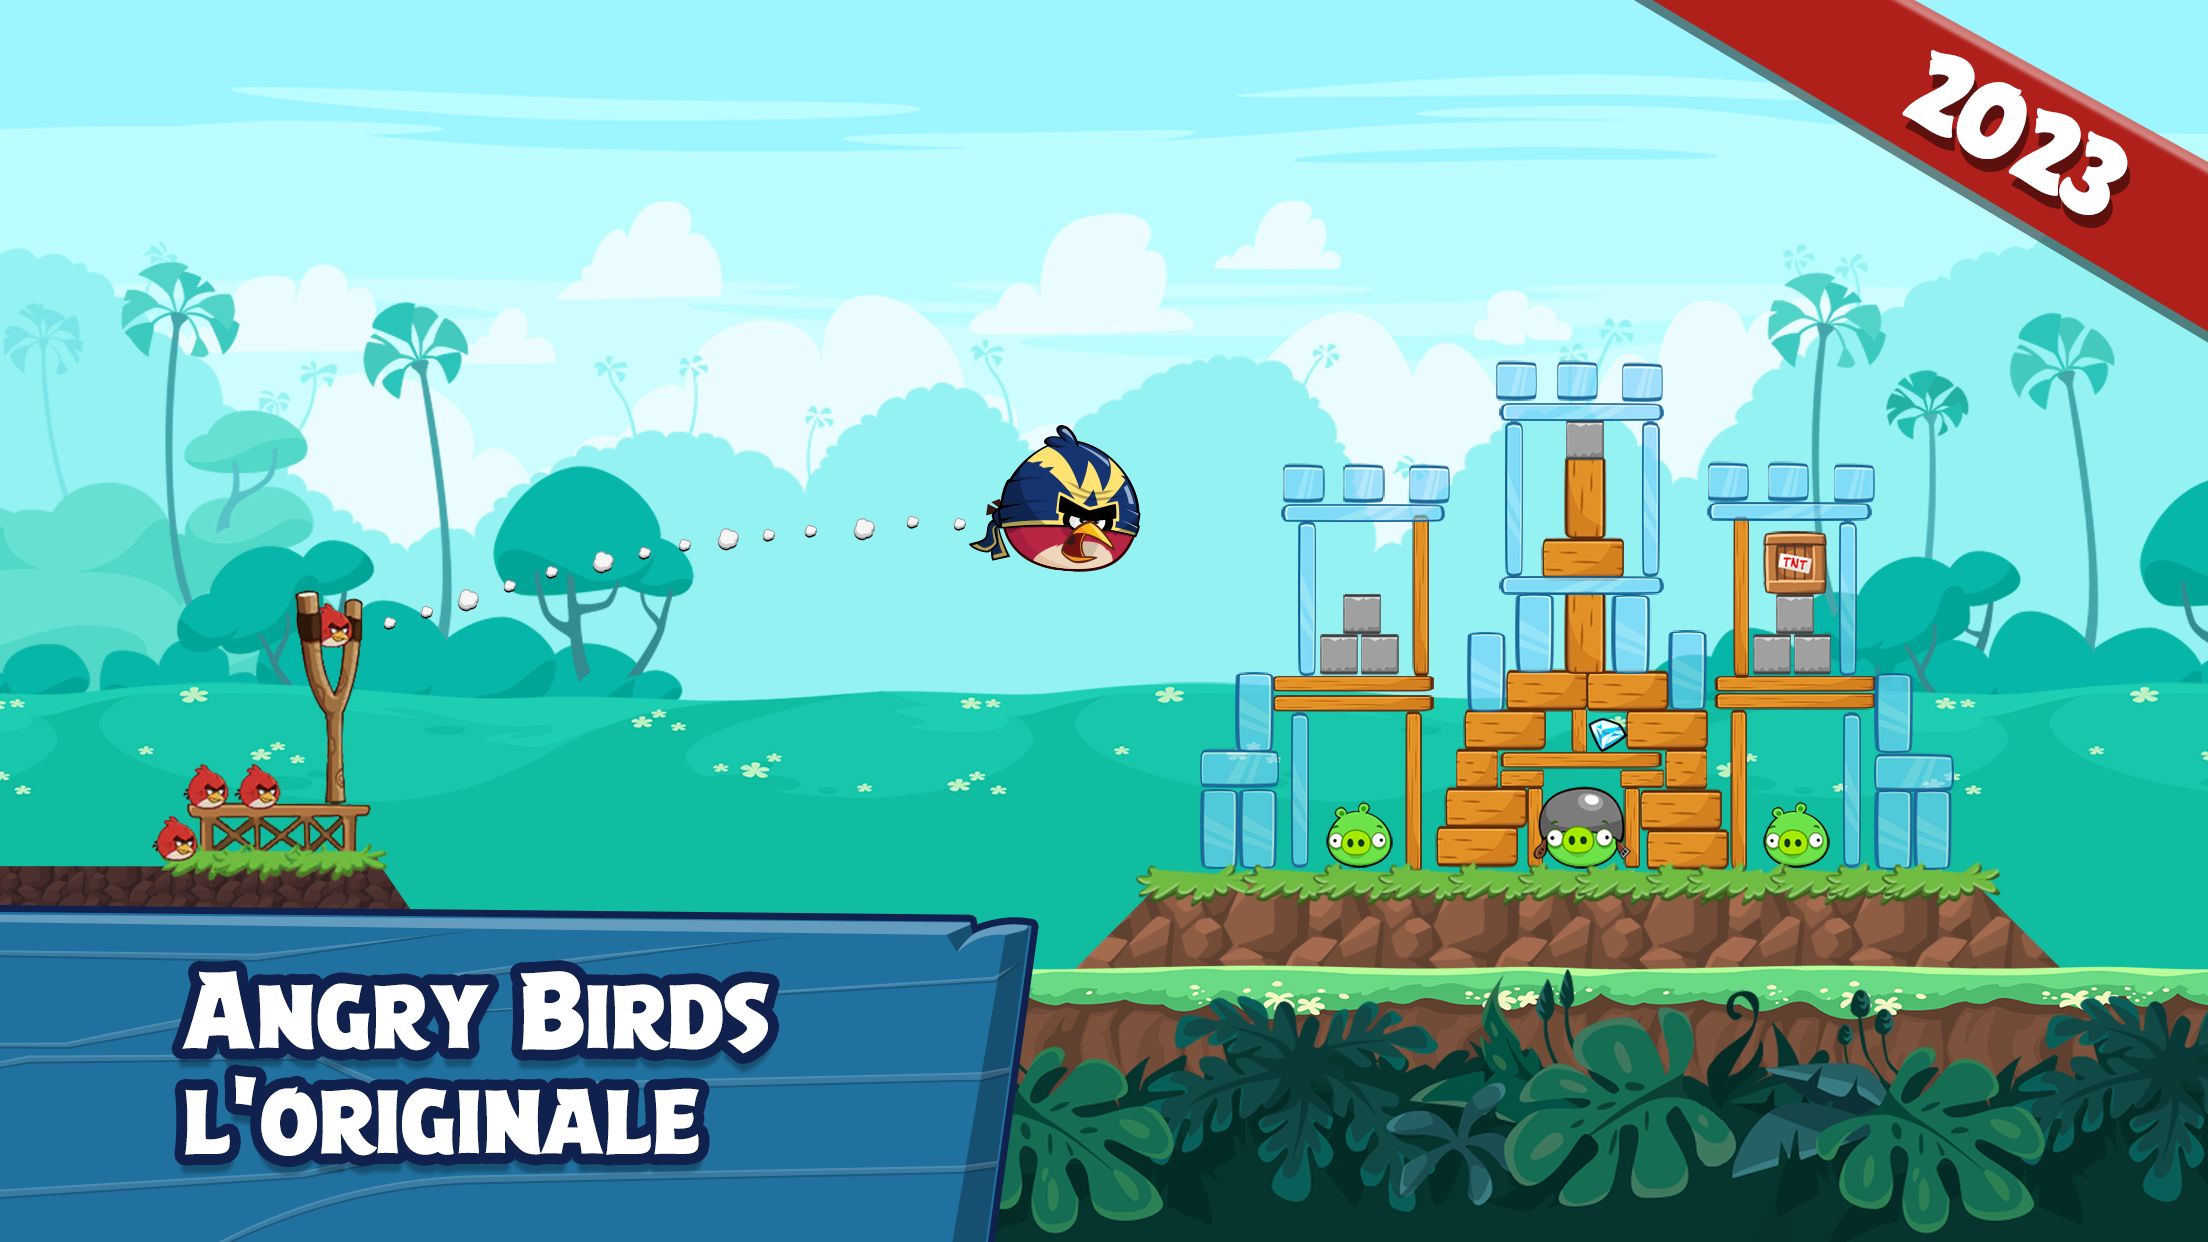 Screenshot 1 of Angry Birds Friends 12.1.0